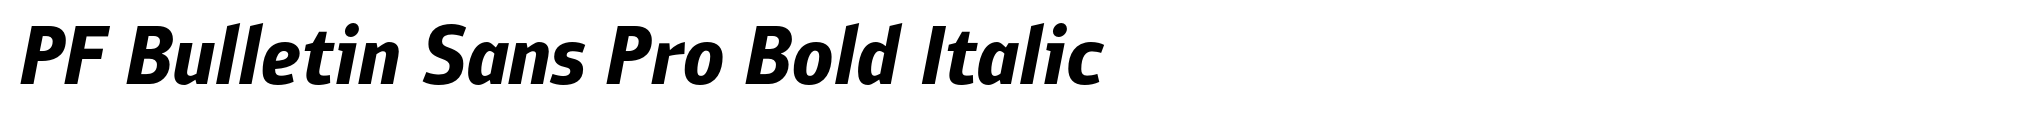 PF Bulletin Sans Pro Bold Italic image